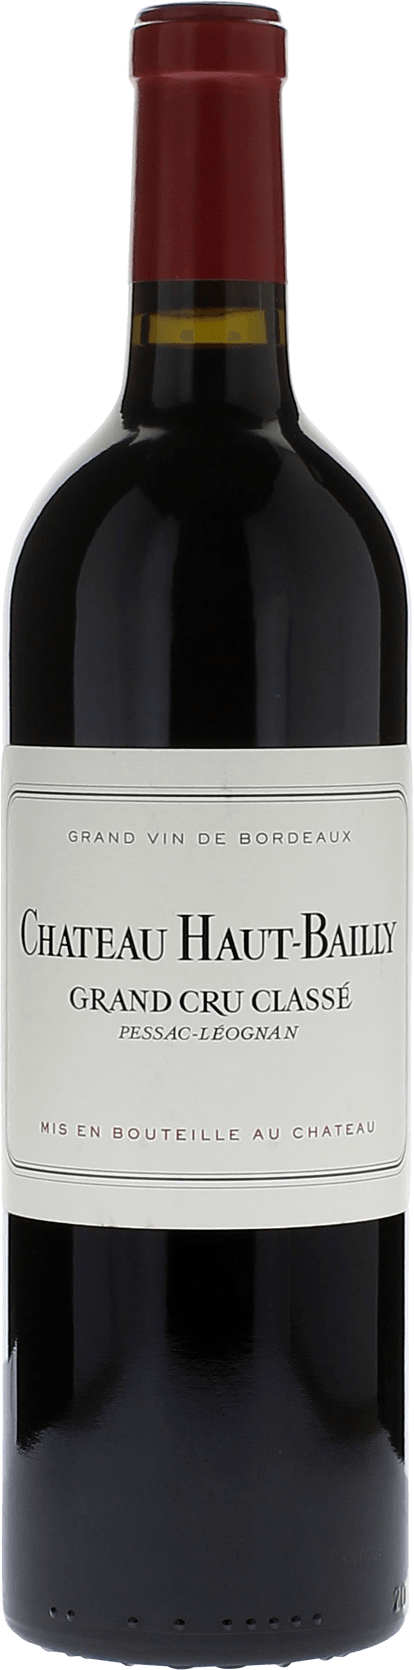 Haut bailly 1990 cru class Pessac-Lognan, Bordeaux rouge